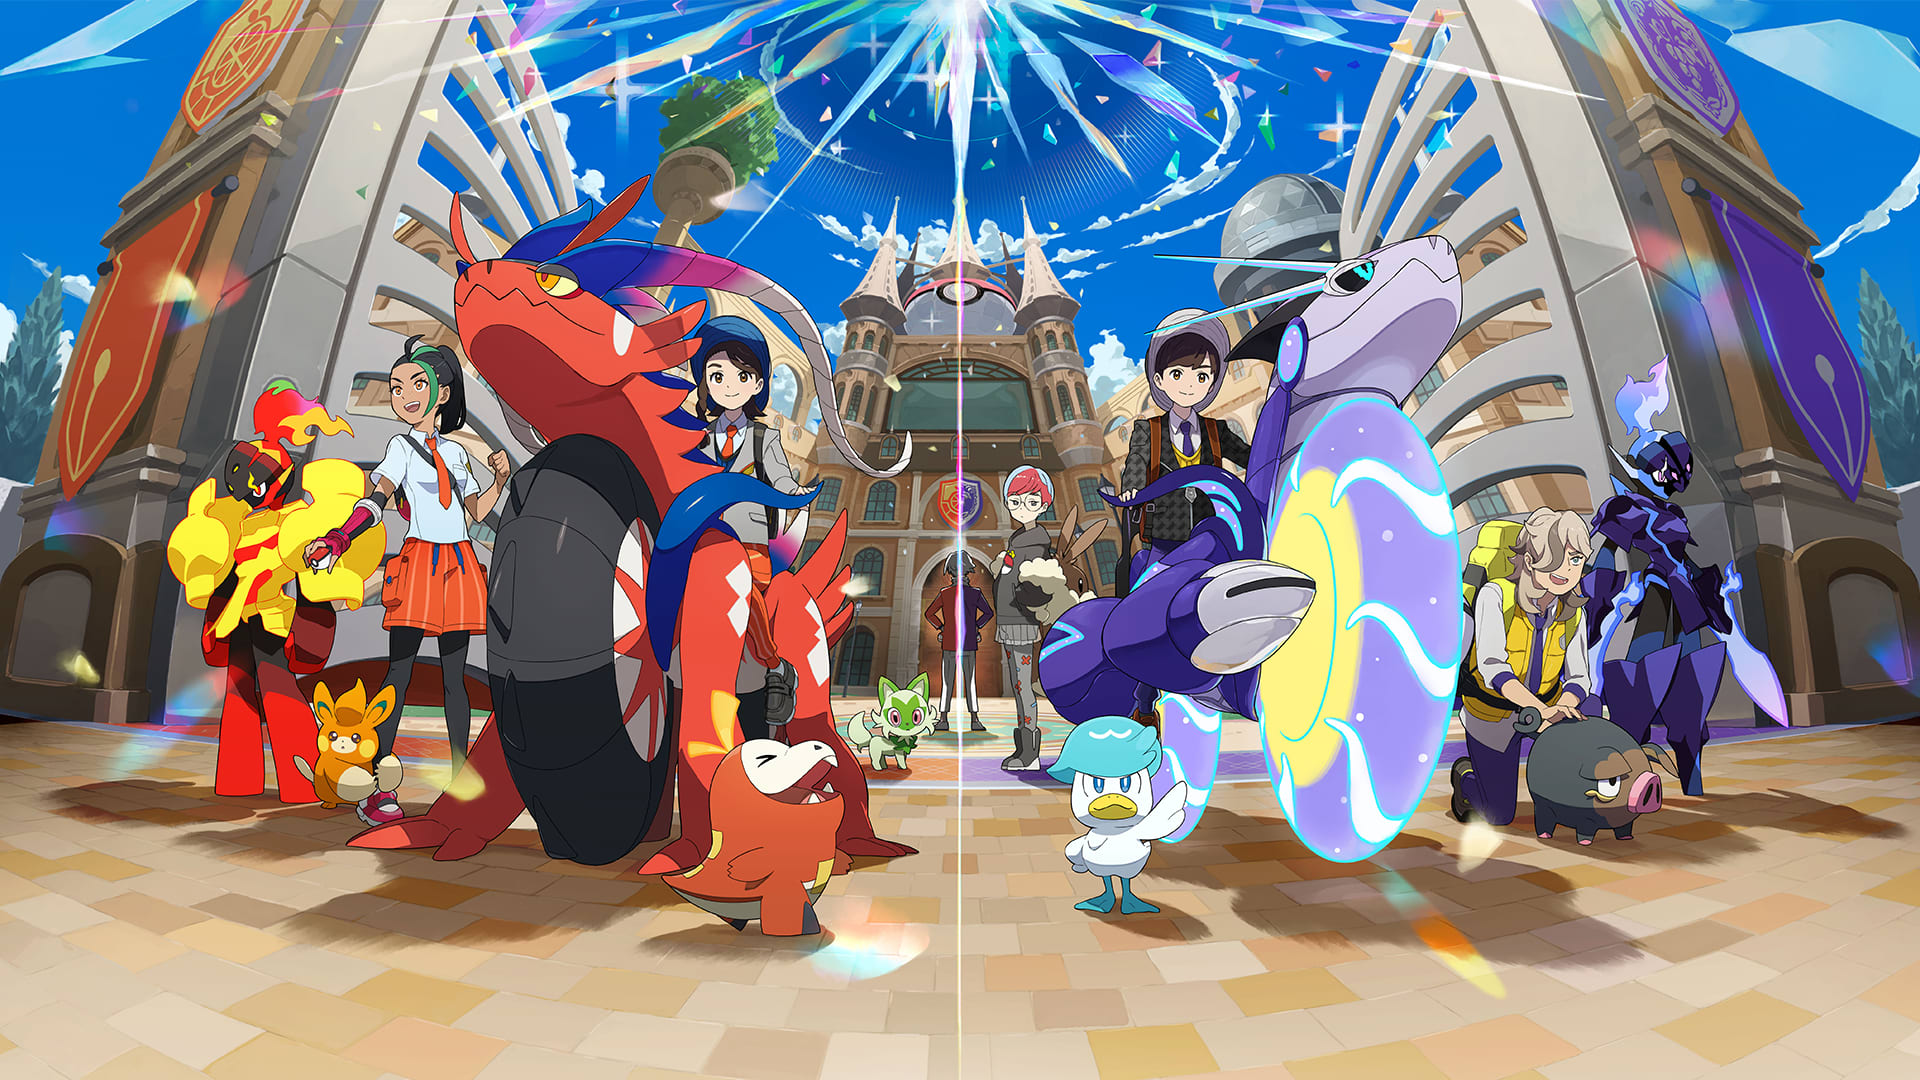 New Pokémon, picnics, and more revealed for the Pokémon Scarlet and Pokémon Violet video games - Image 6